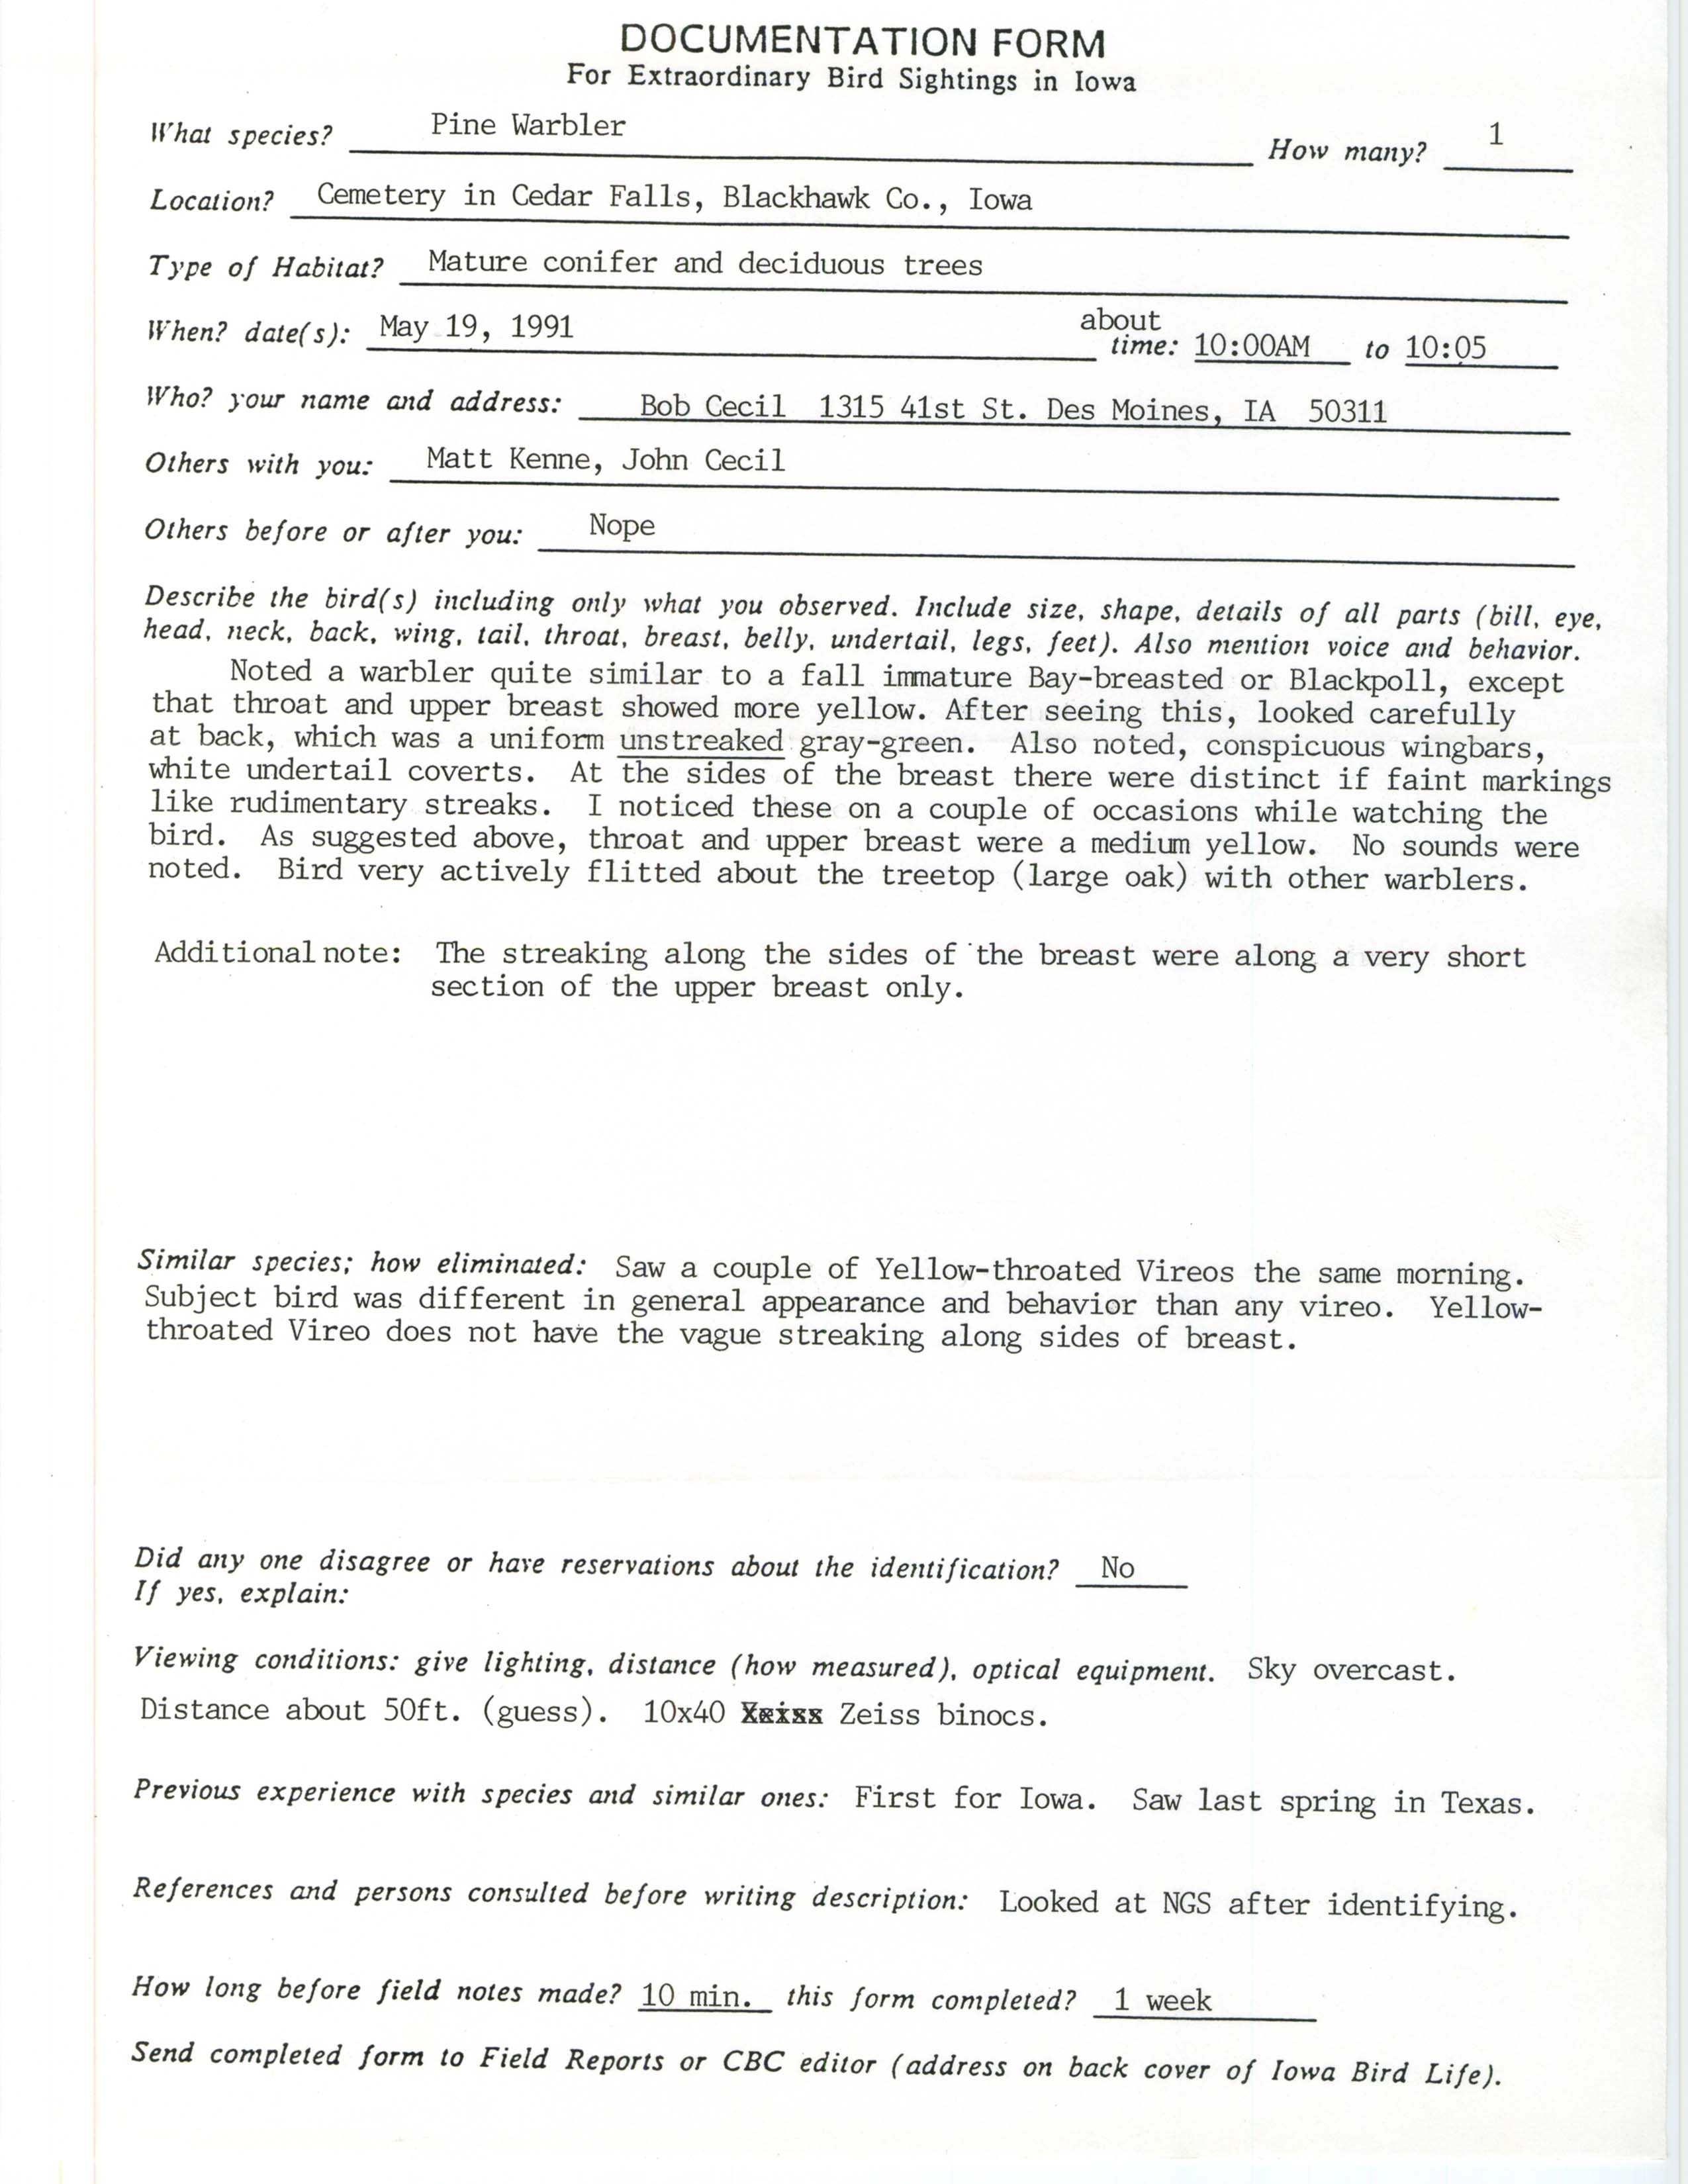 Rare bird documentation form for Pine Warbler at Cedar Falls, 1991